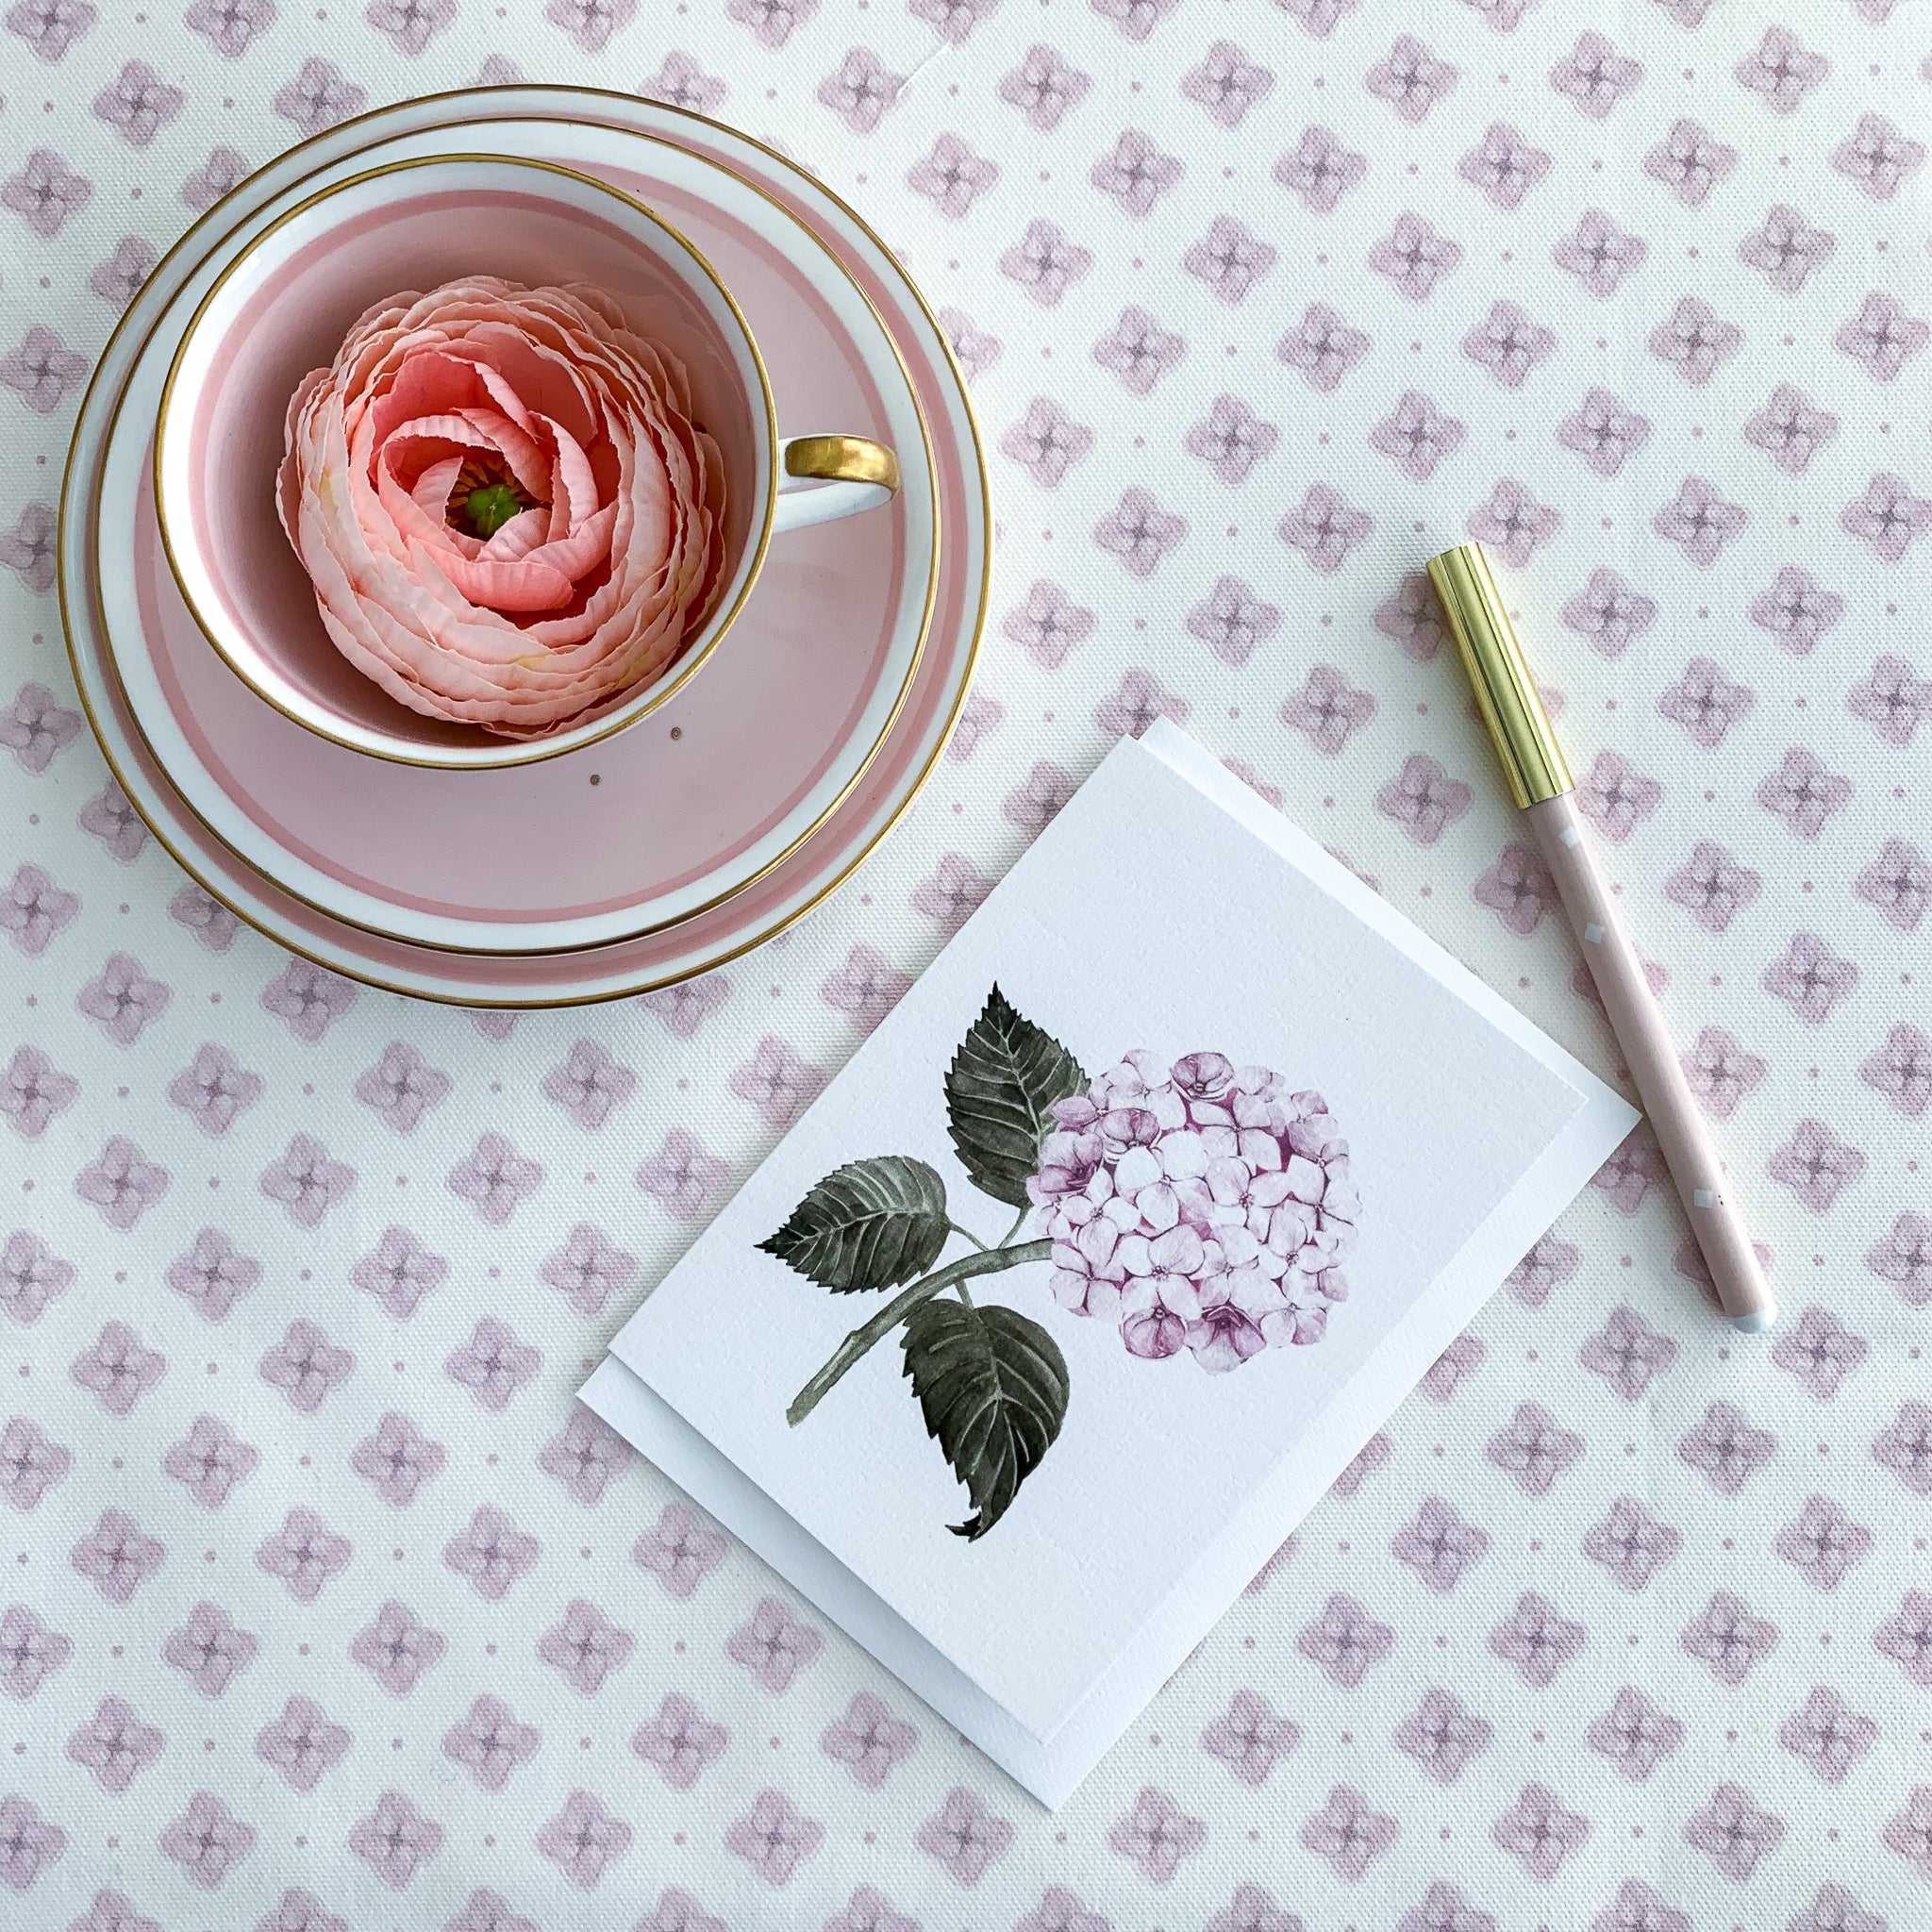 Floral Greeting Card Set - Hydrangea Lane Home